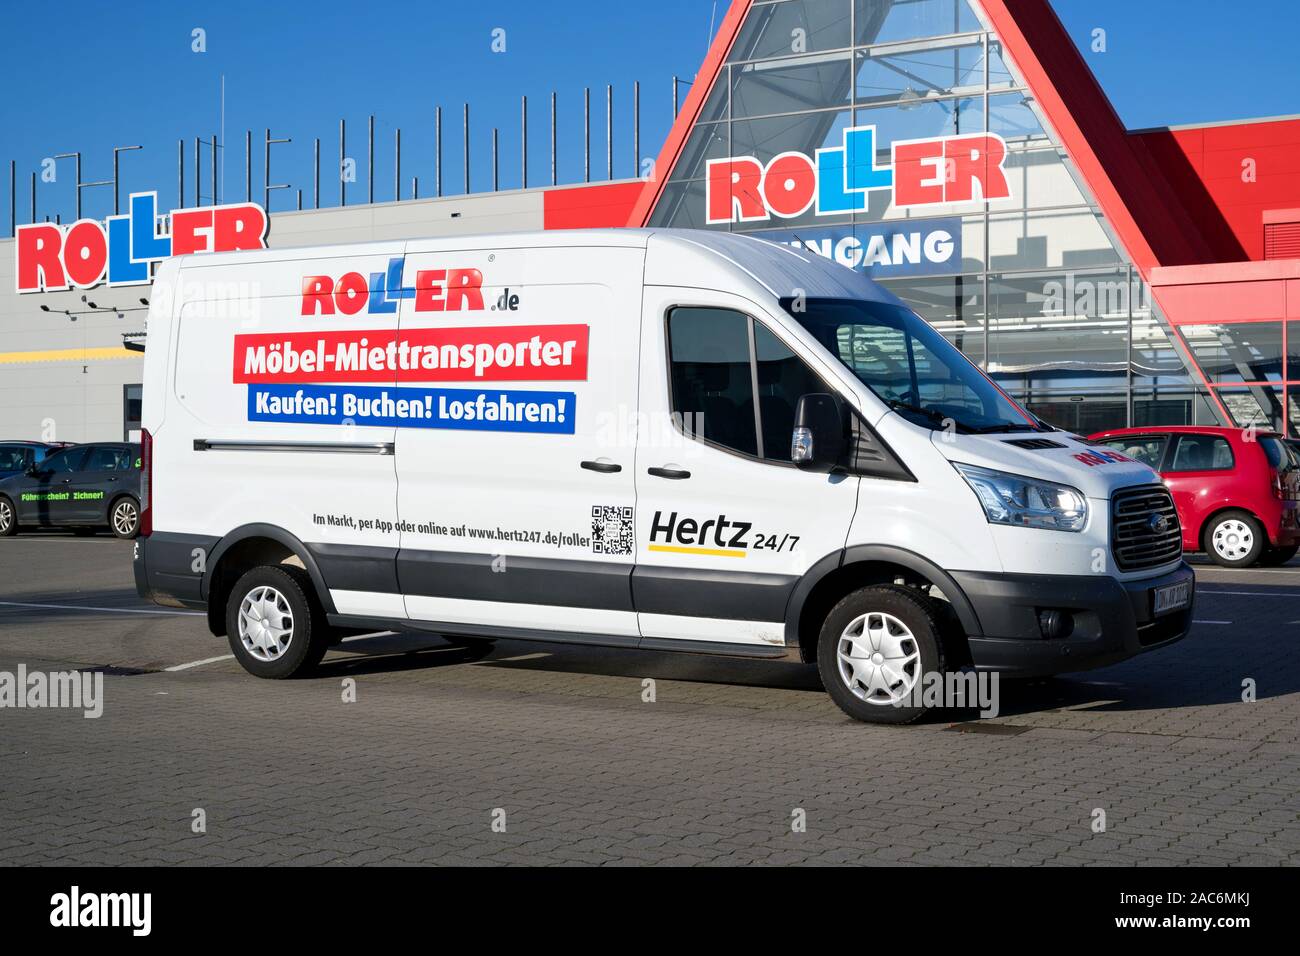 Hertz 24/7 Roller rental van at store. Roller is a German furniture discounter based in Gelsenkirchen. Stock Photo